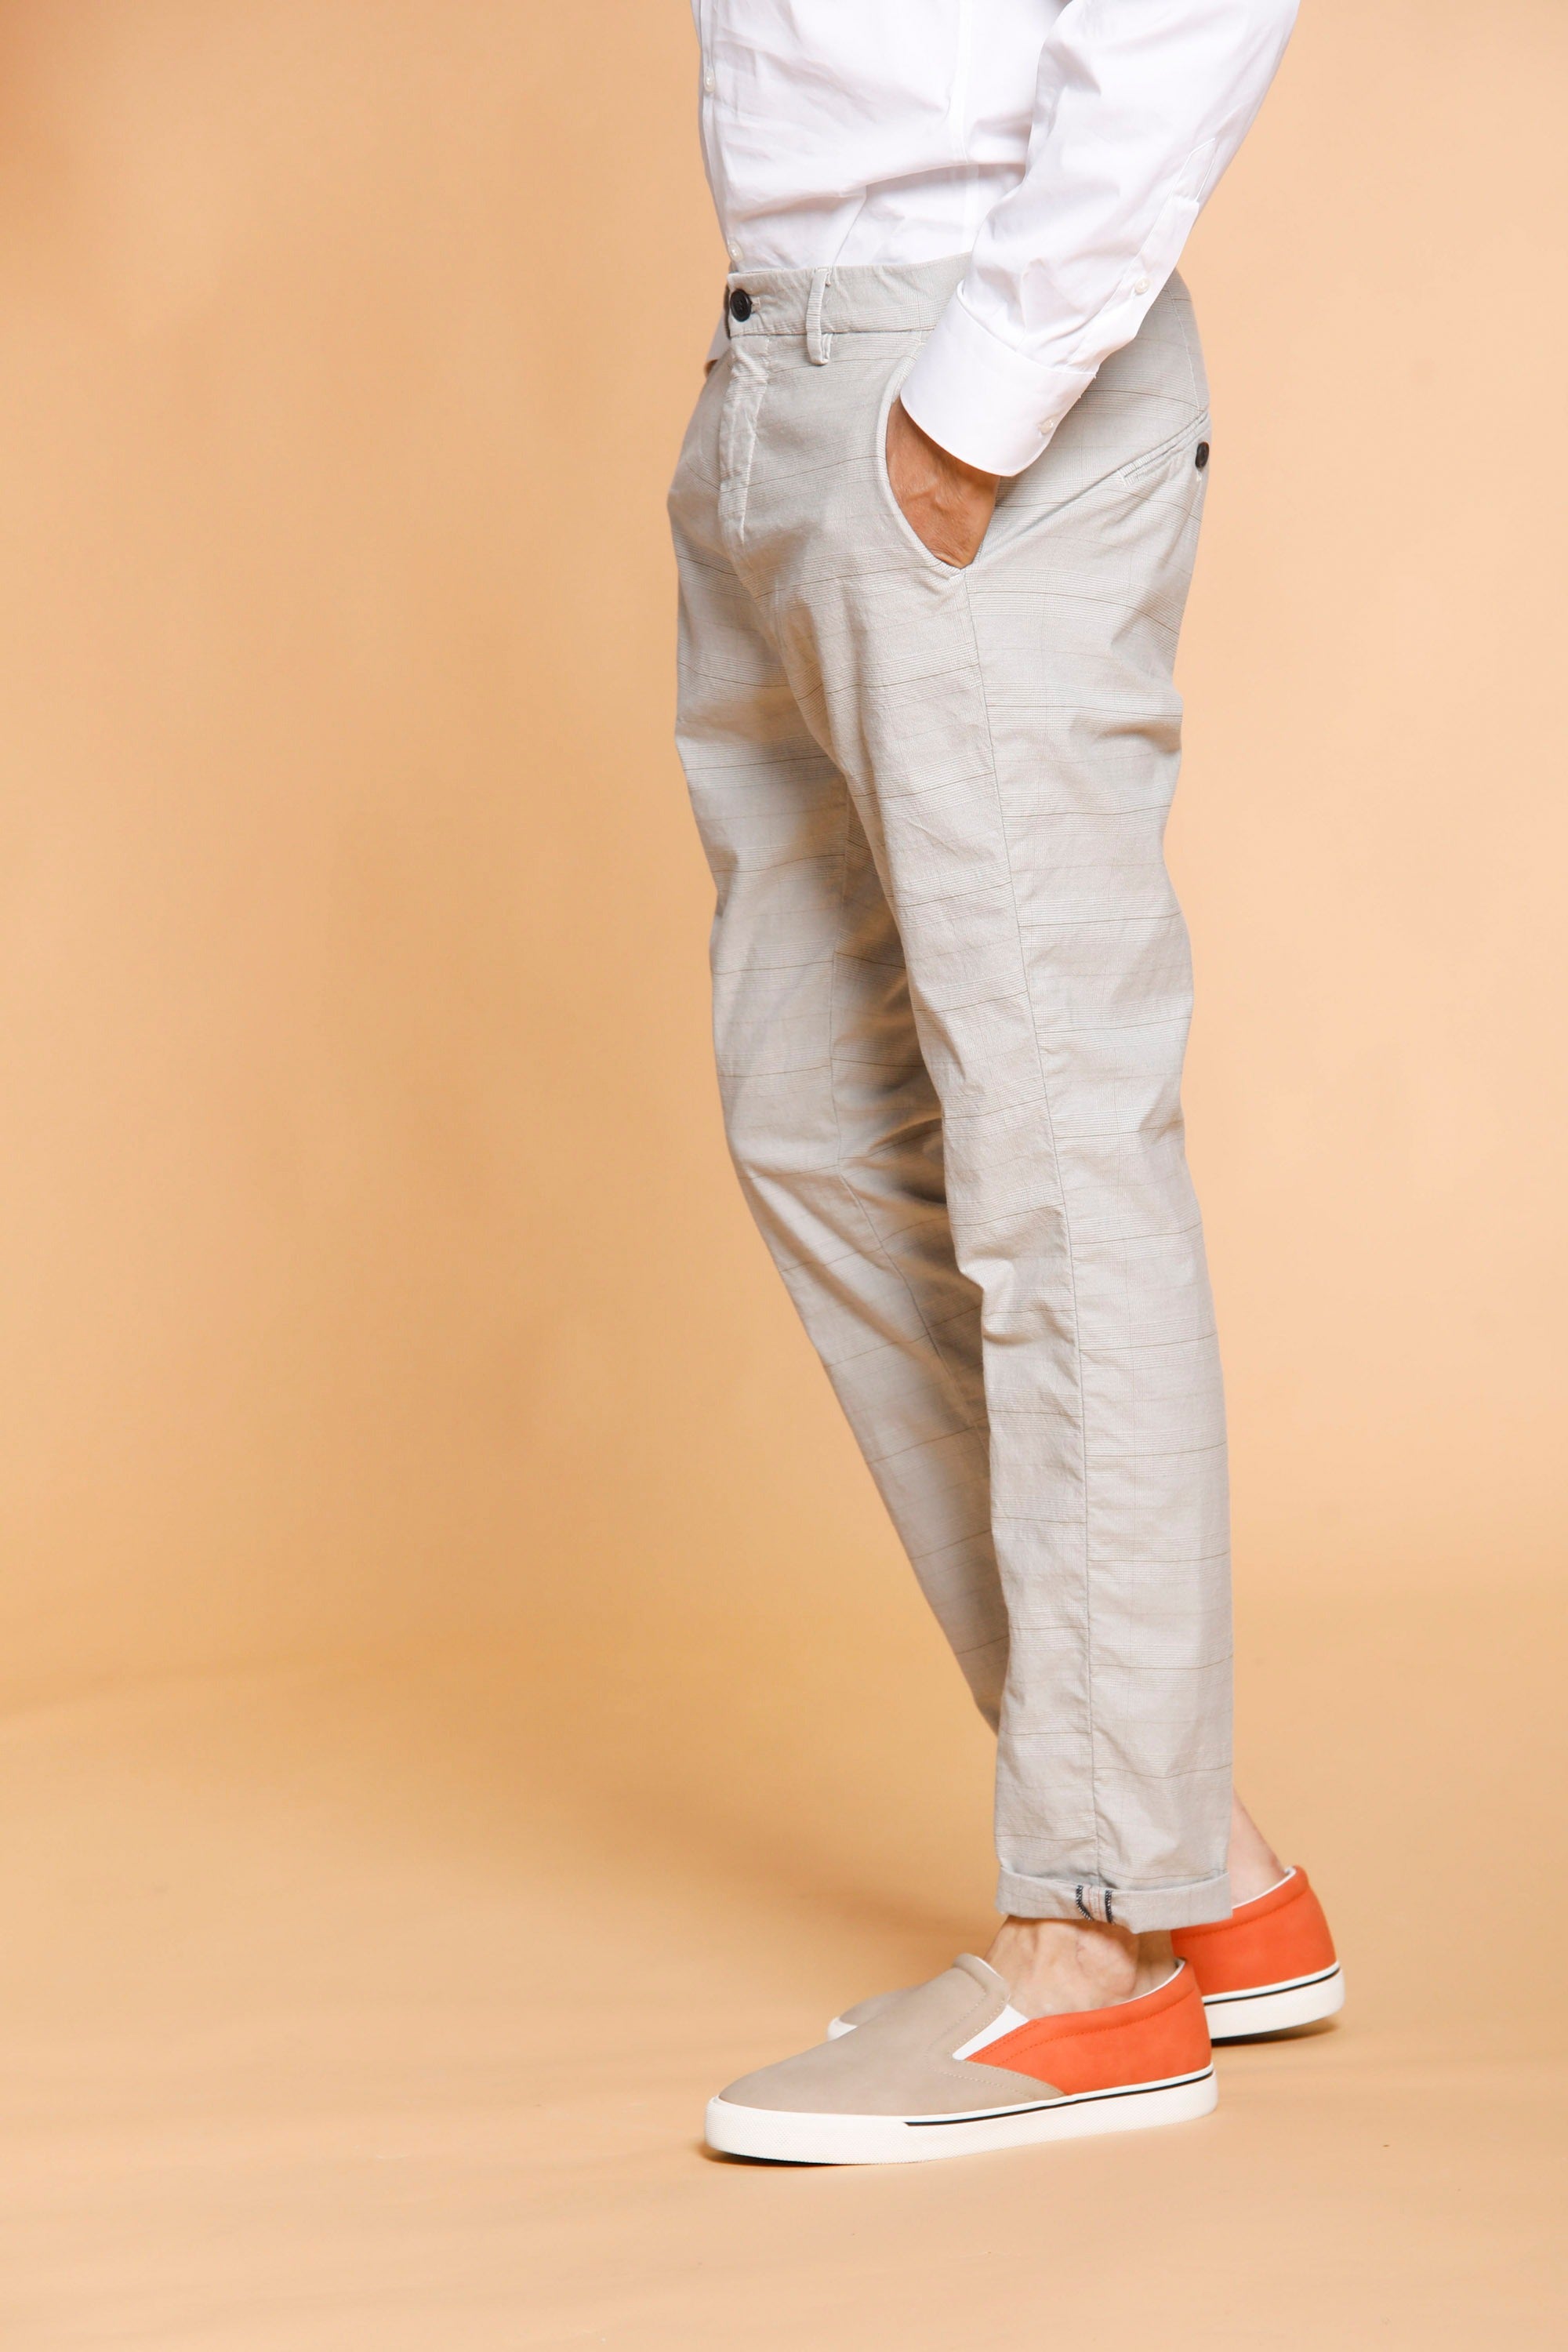 Osaka Style Pantalon chino homme en coton mouliné galles carrot fit